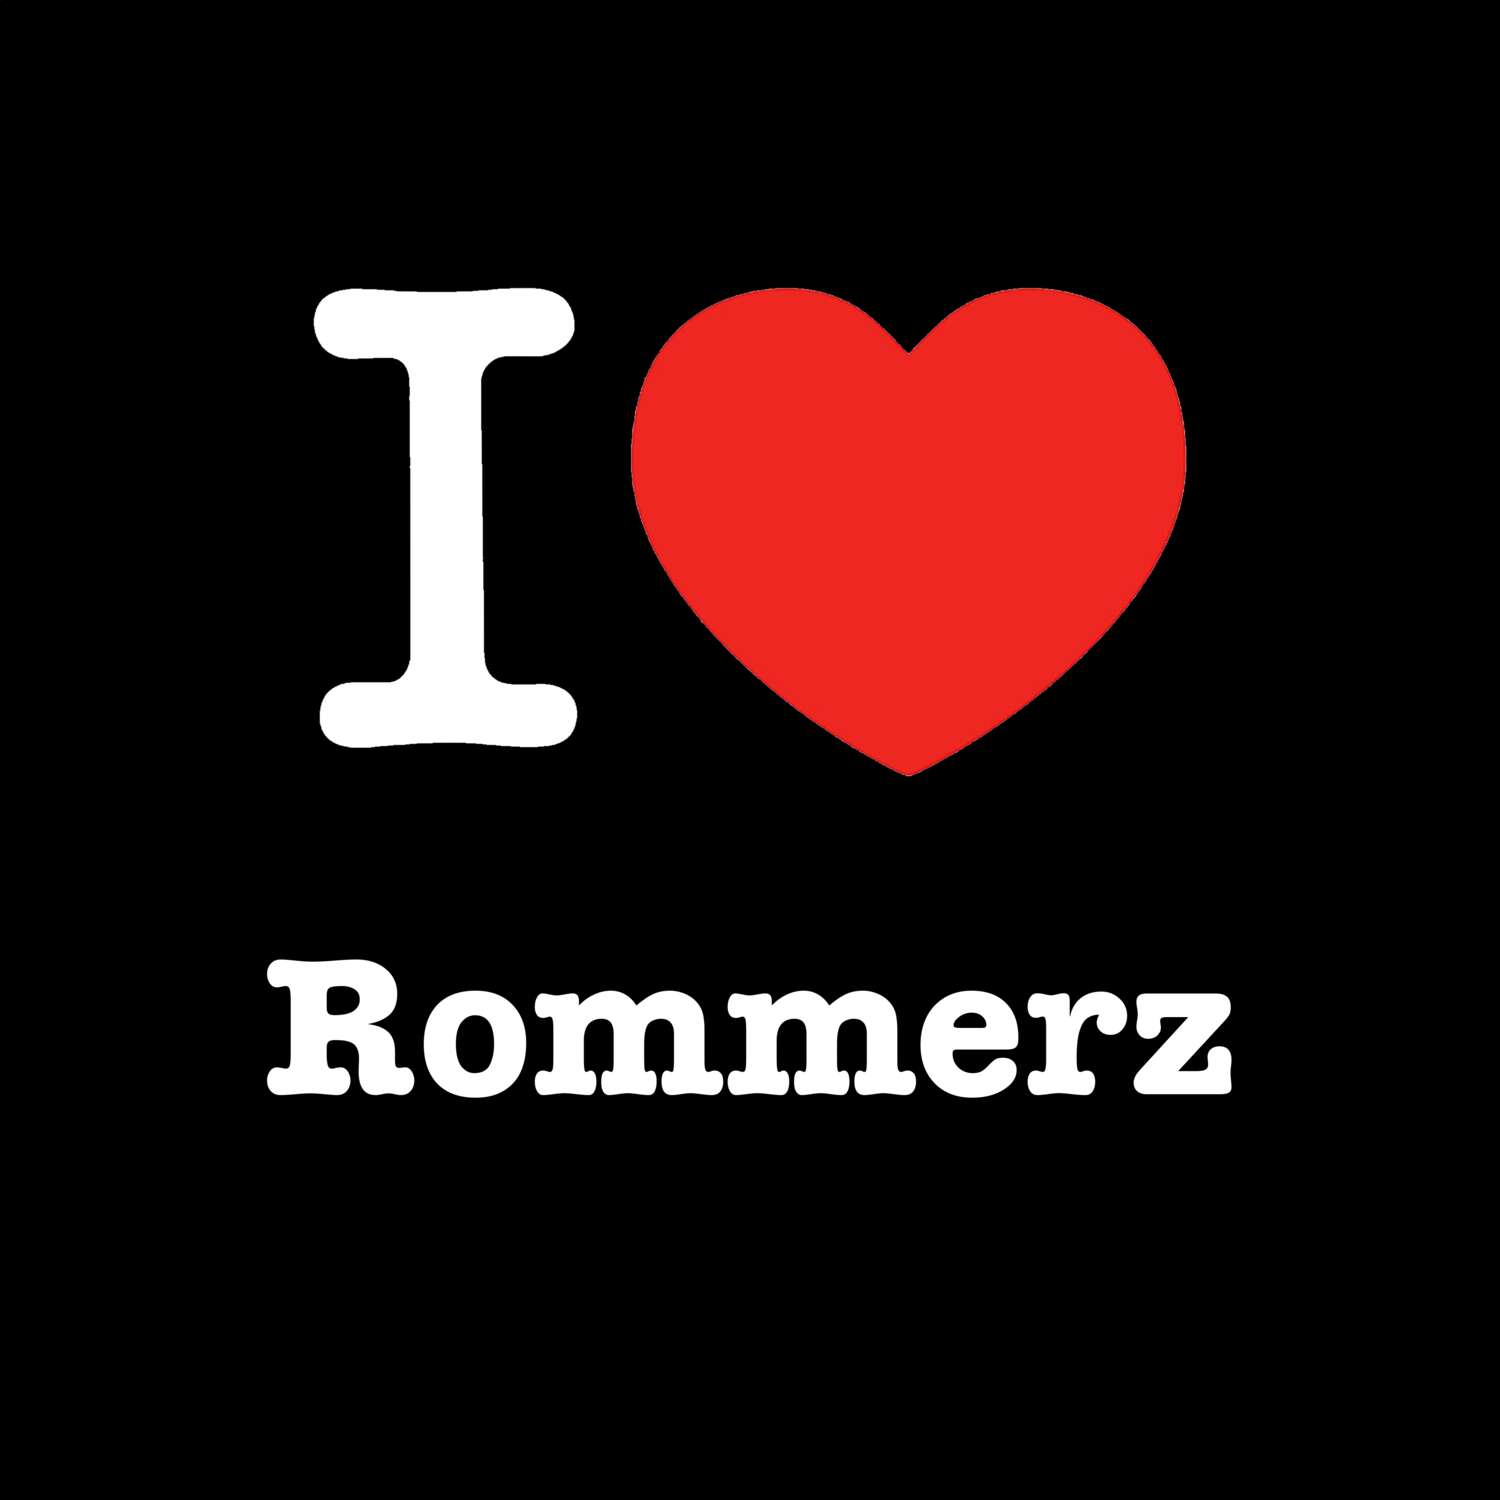 Rommerz T-Shirt »I love«